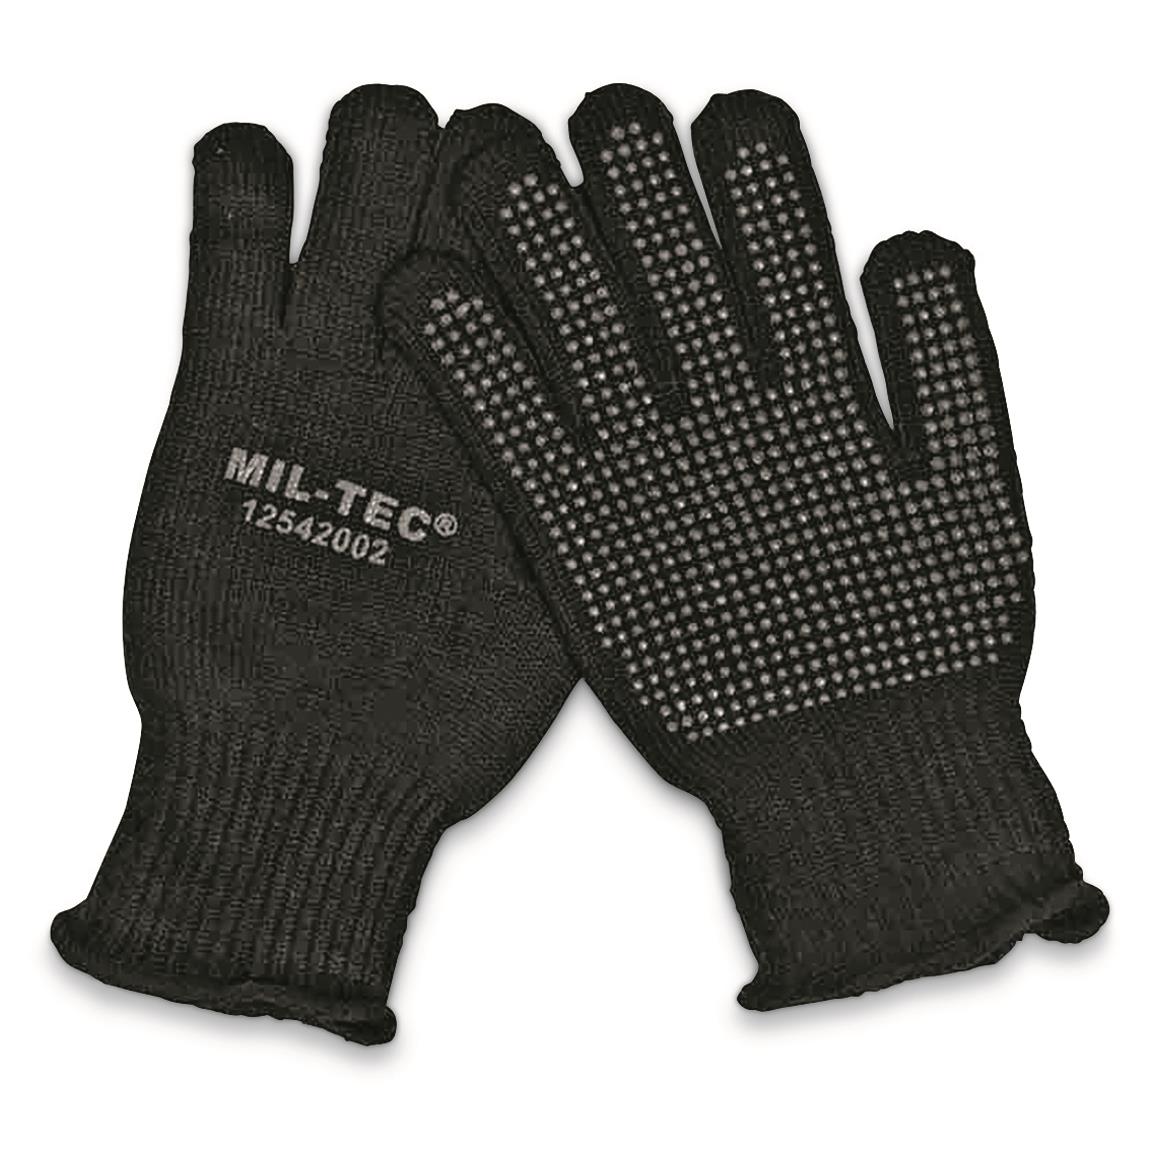 Mil-Tec Gripper Utility Gloves, Black